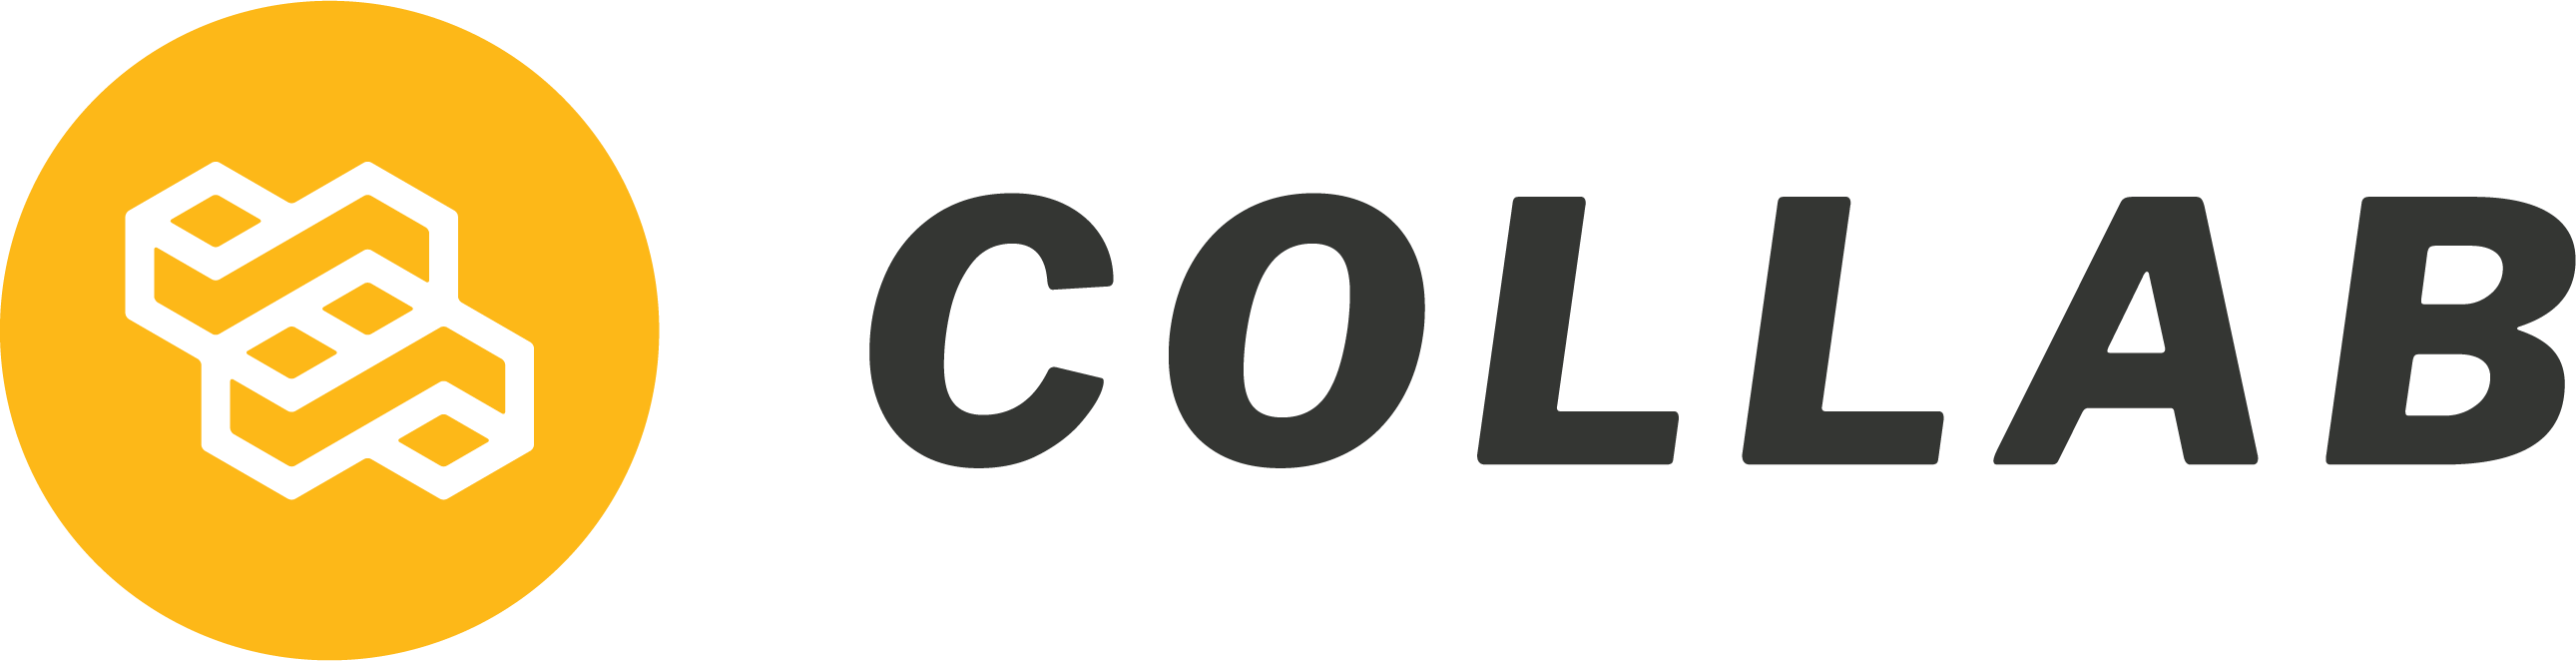 Collab logo